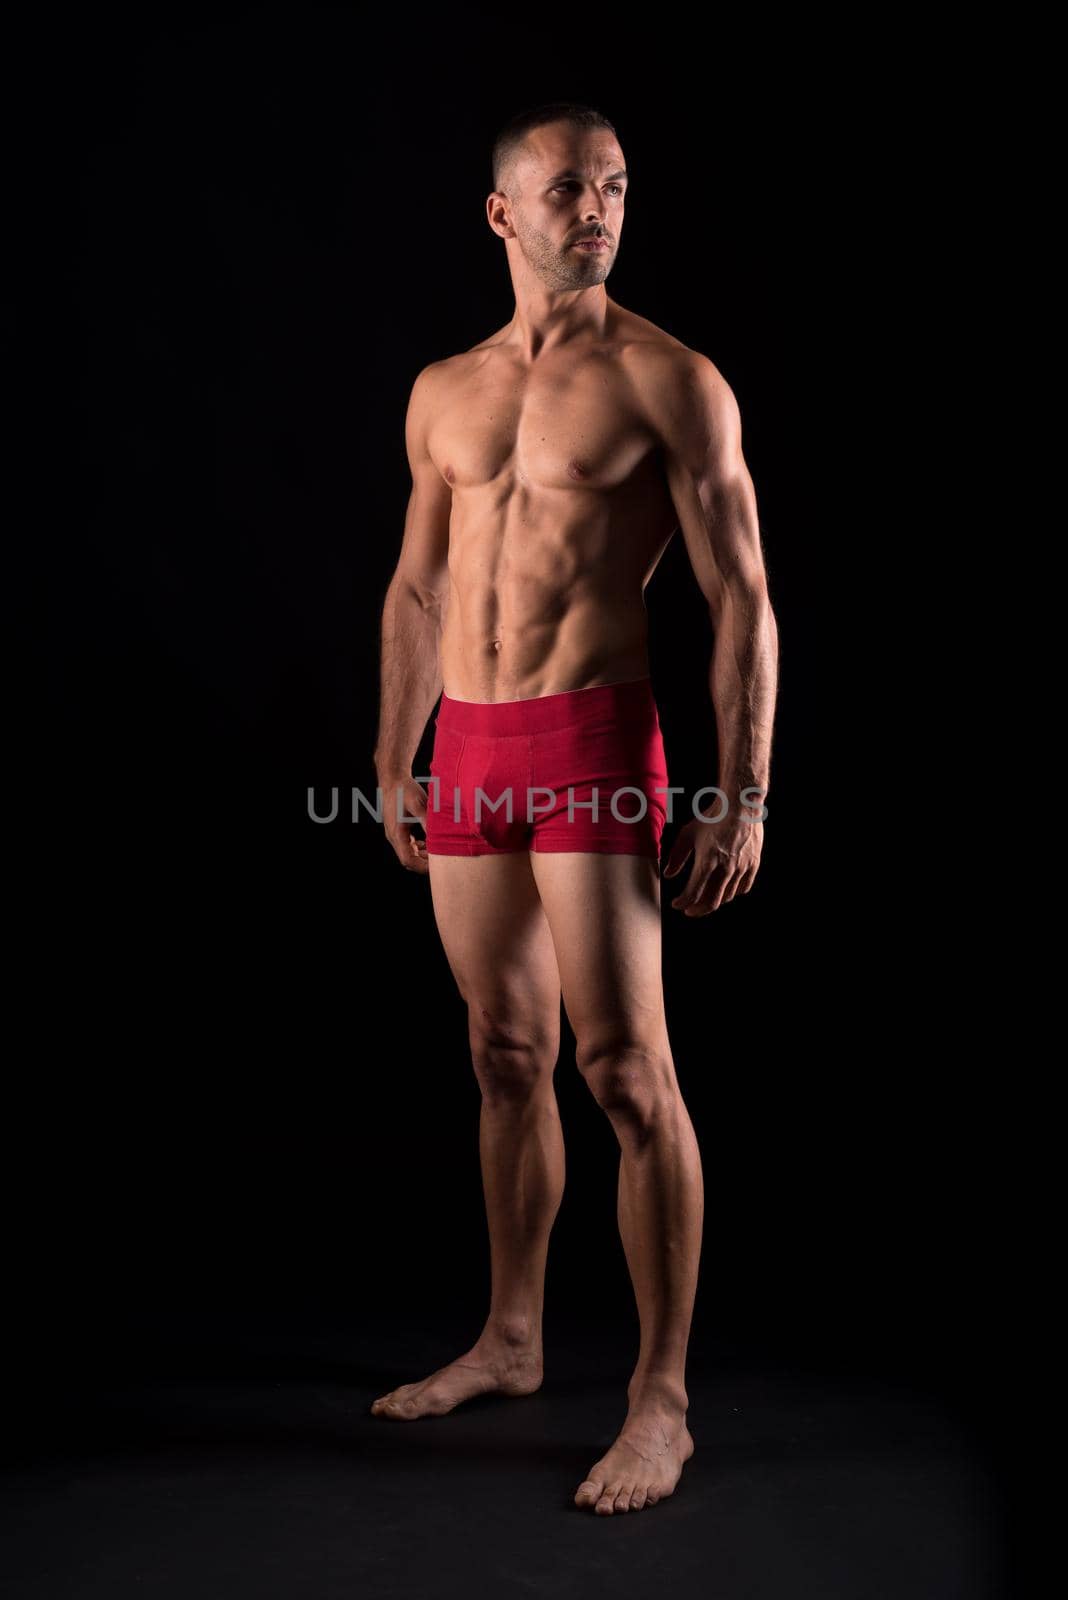 Athletic man in underwear. Full body. Black background.